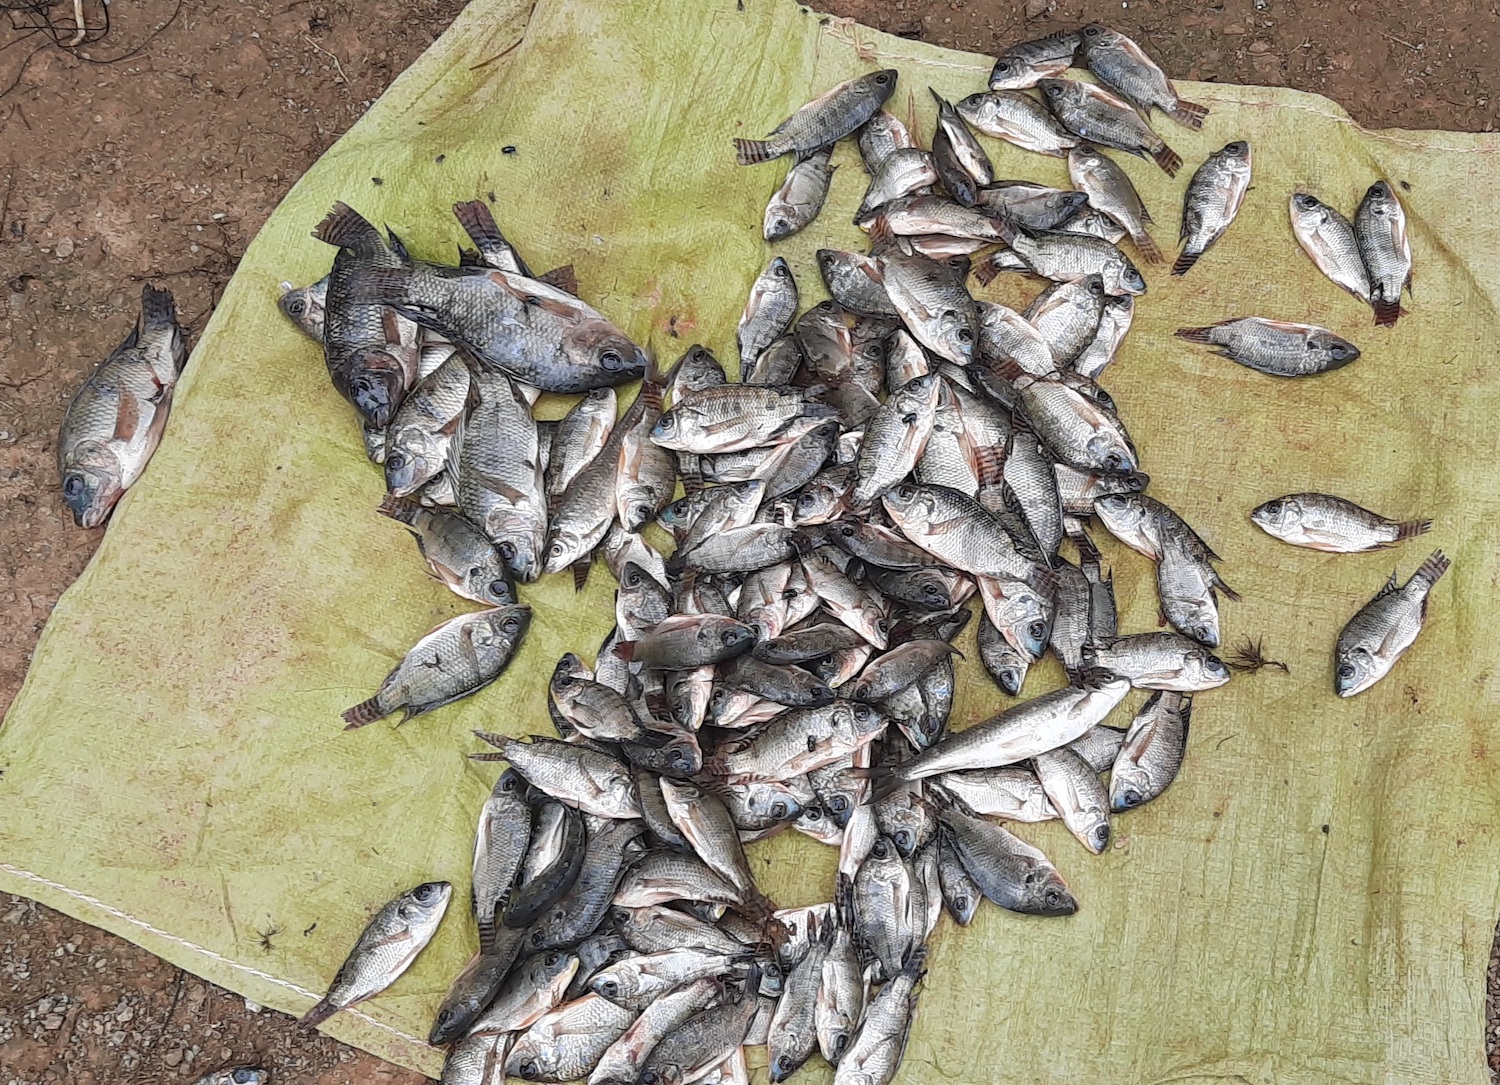 Nile tilapia caught at Pekon Lake in southern Shan State, where few indigenous fish species remain. (Thadoe Wai | WWF-Myanmar)